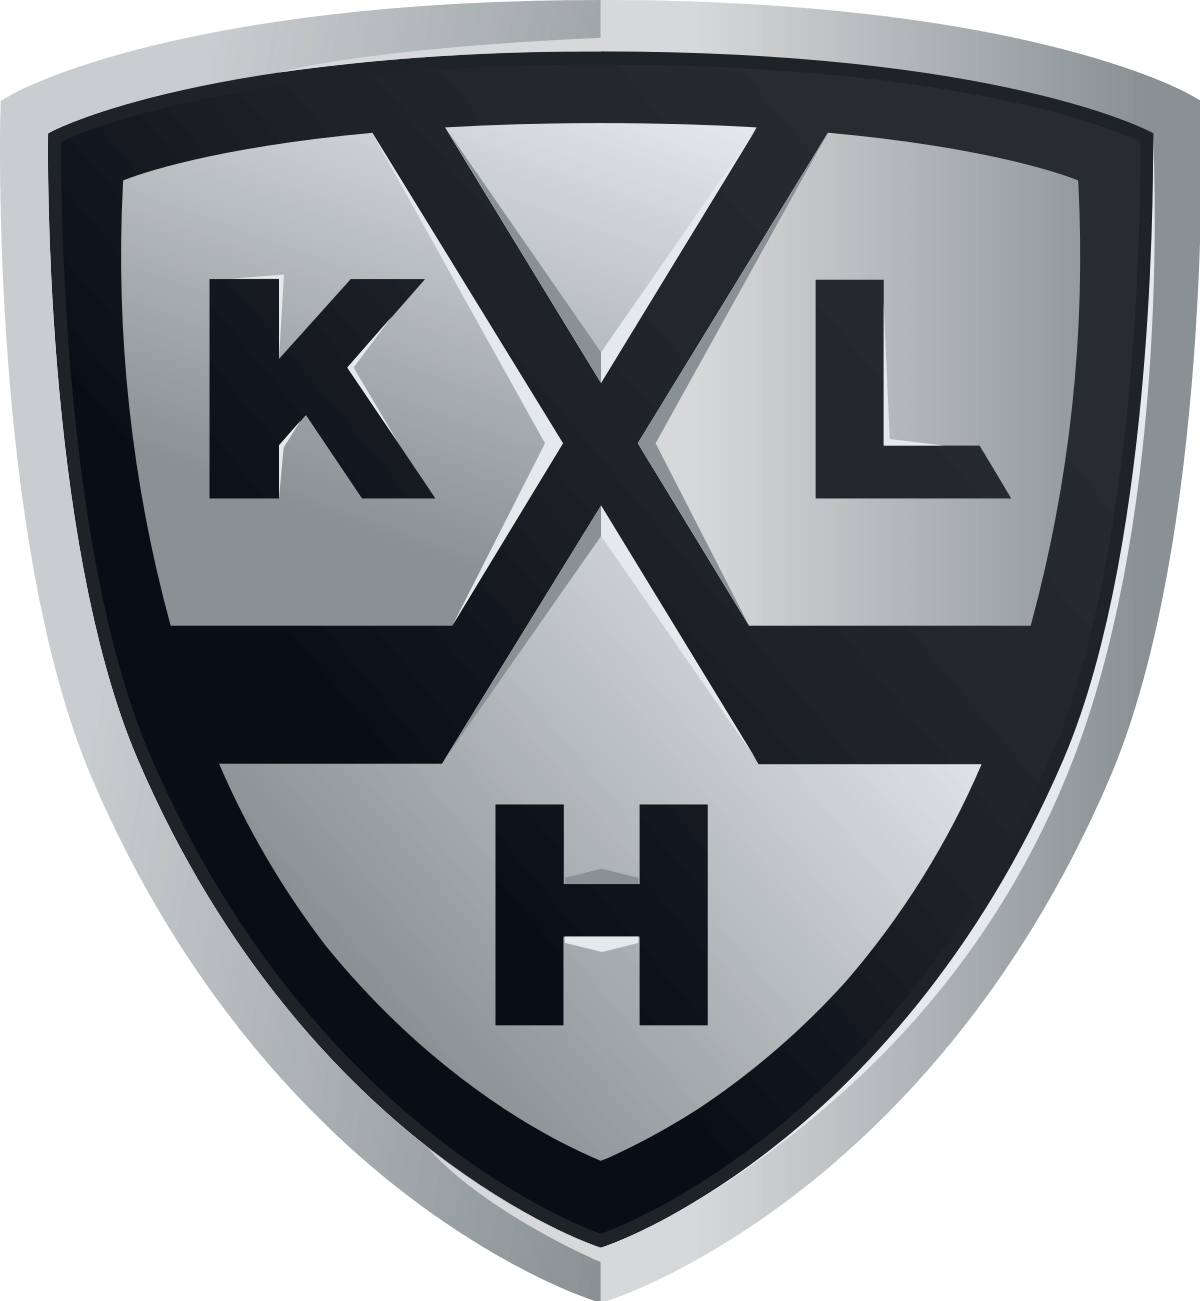 px KHL logo shield